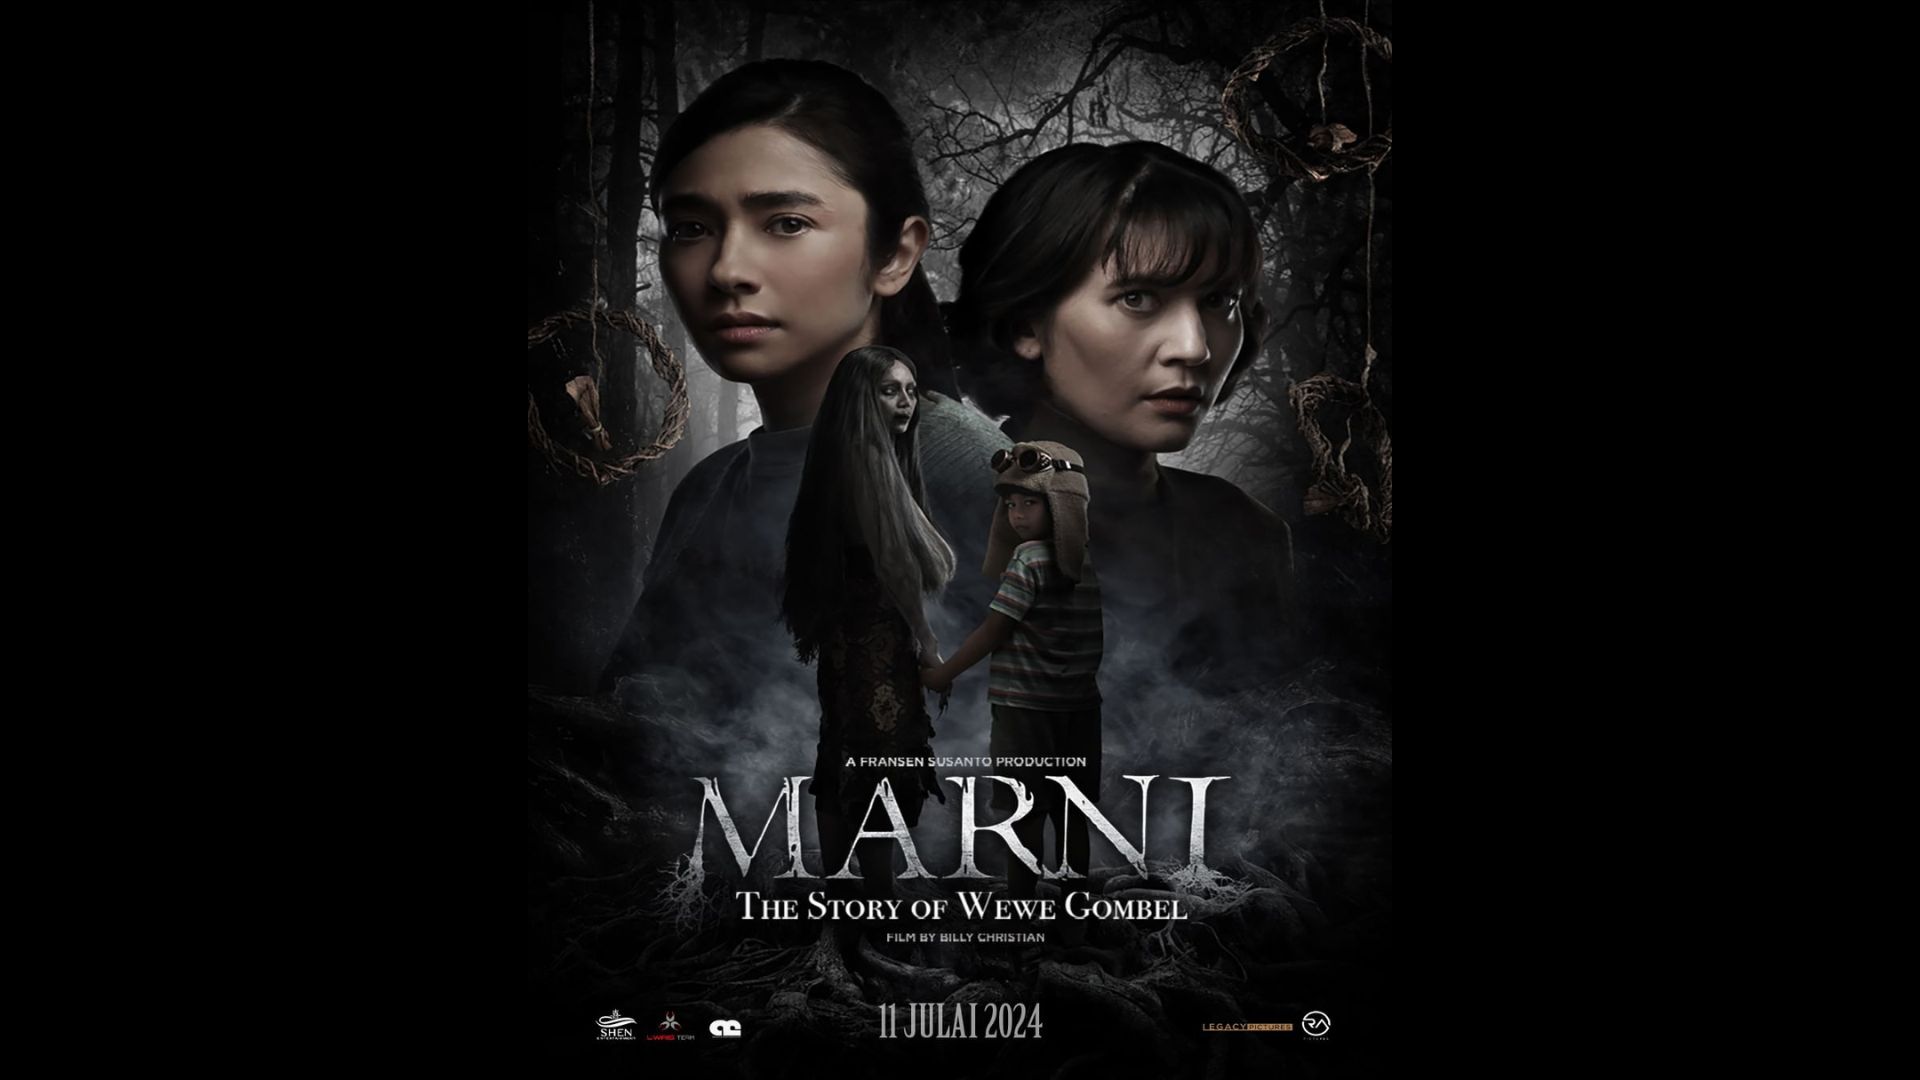 film horor indonesia terbaru, Marni: The Story of Wewe Gombel